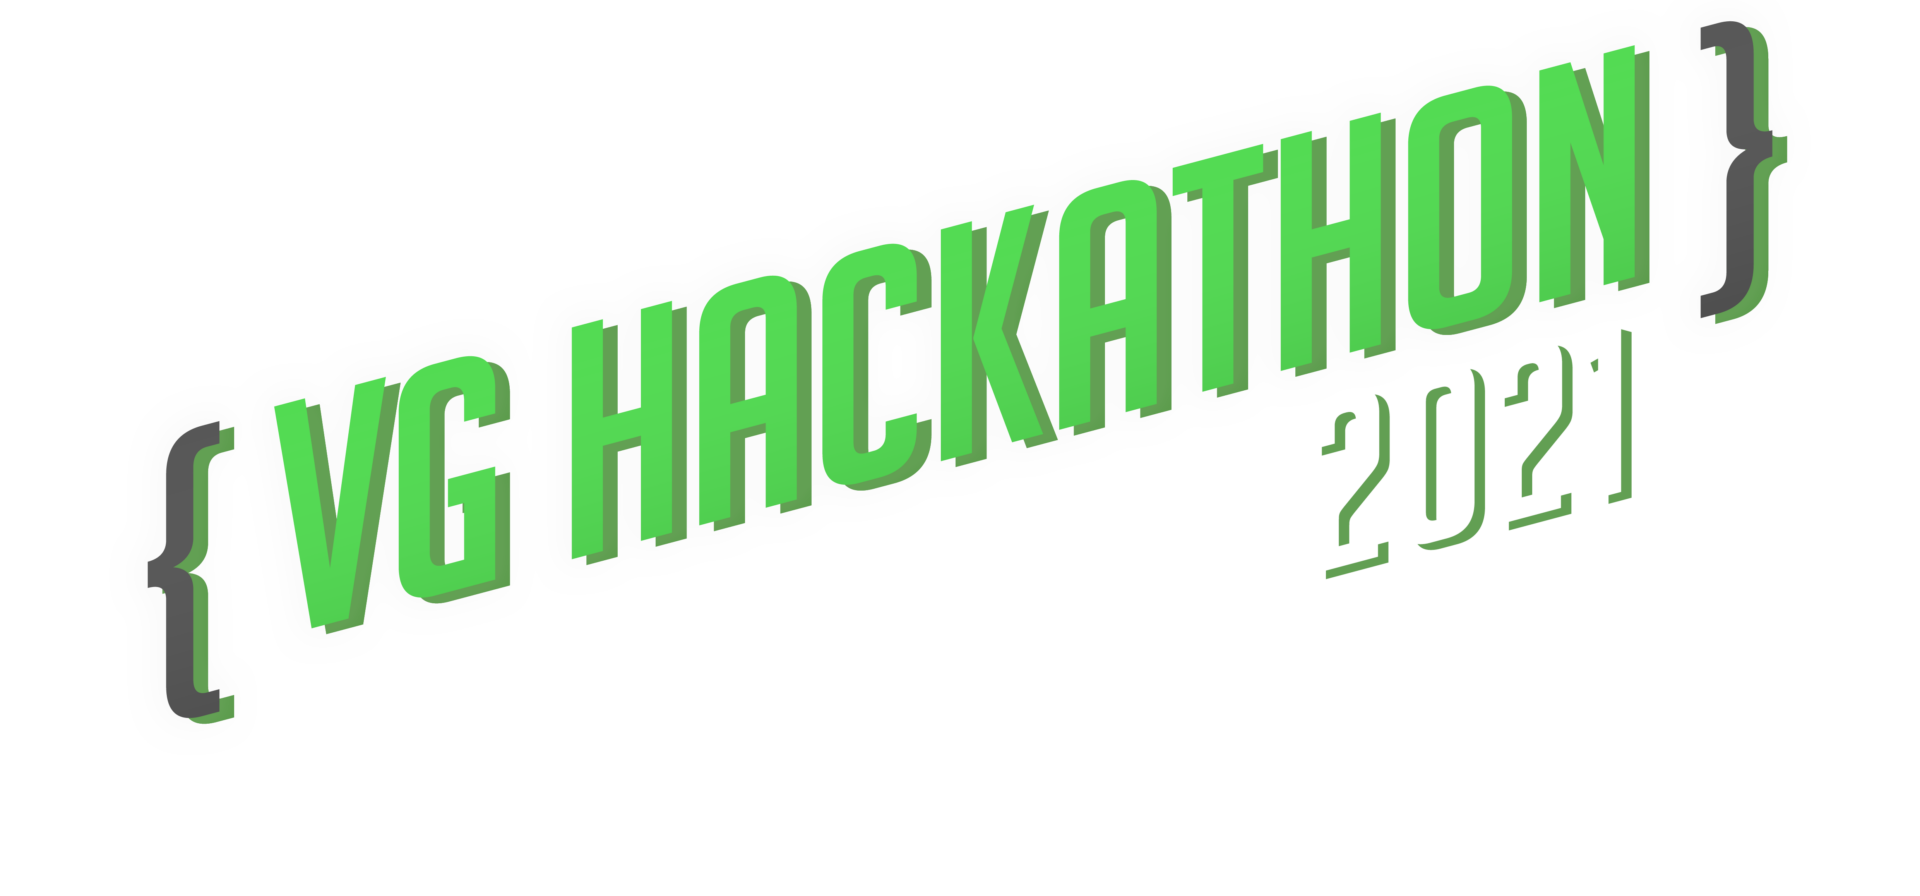 cropped-logo-hackathon-2021-noslogan-transparant-1-1920×896